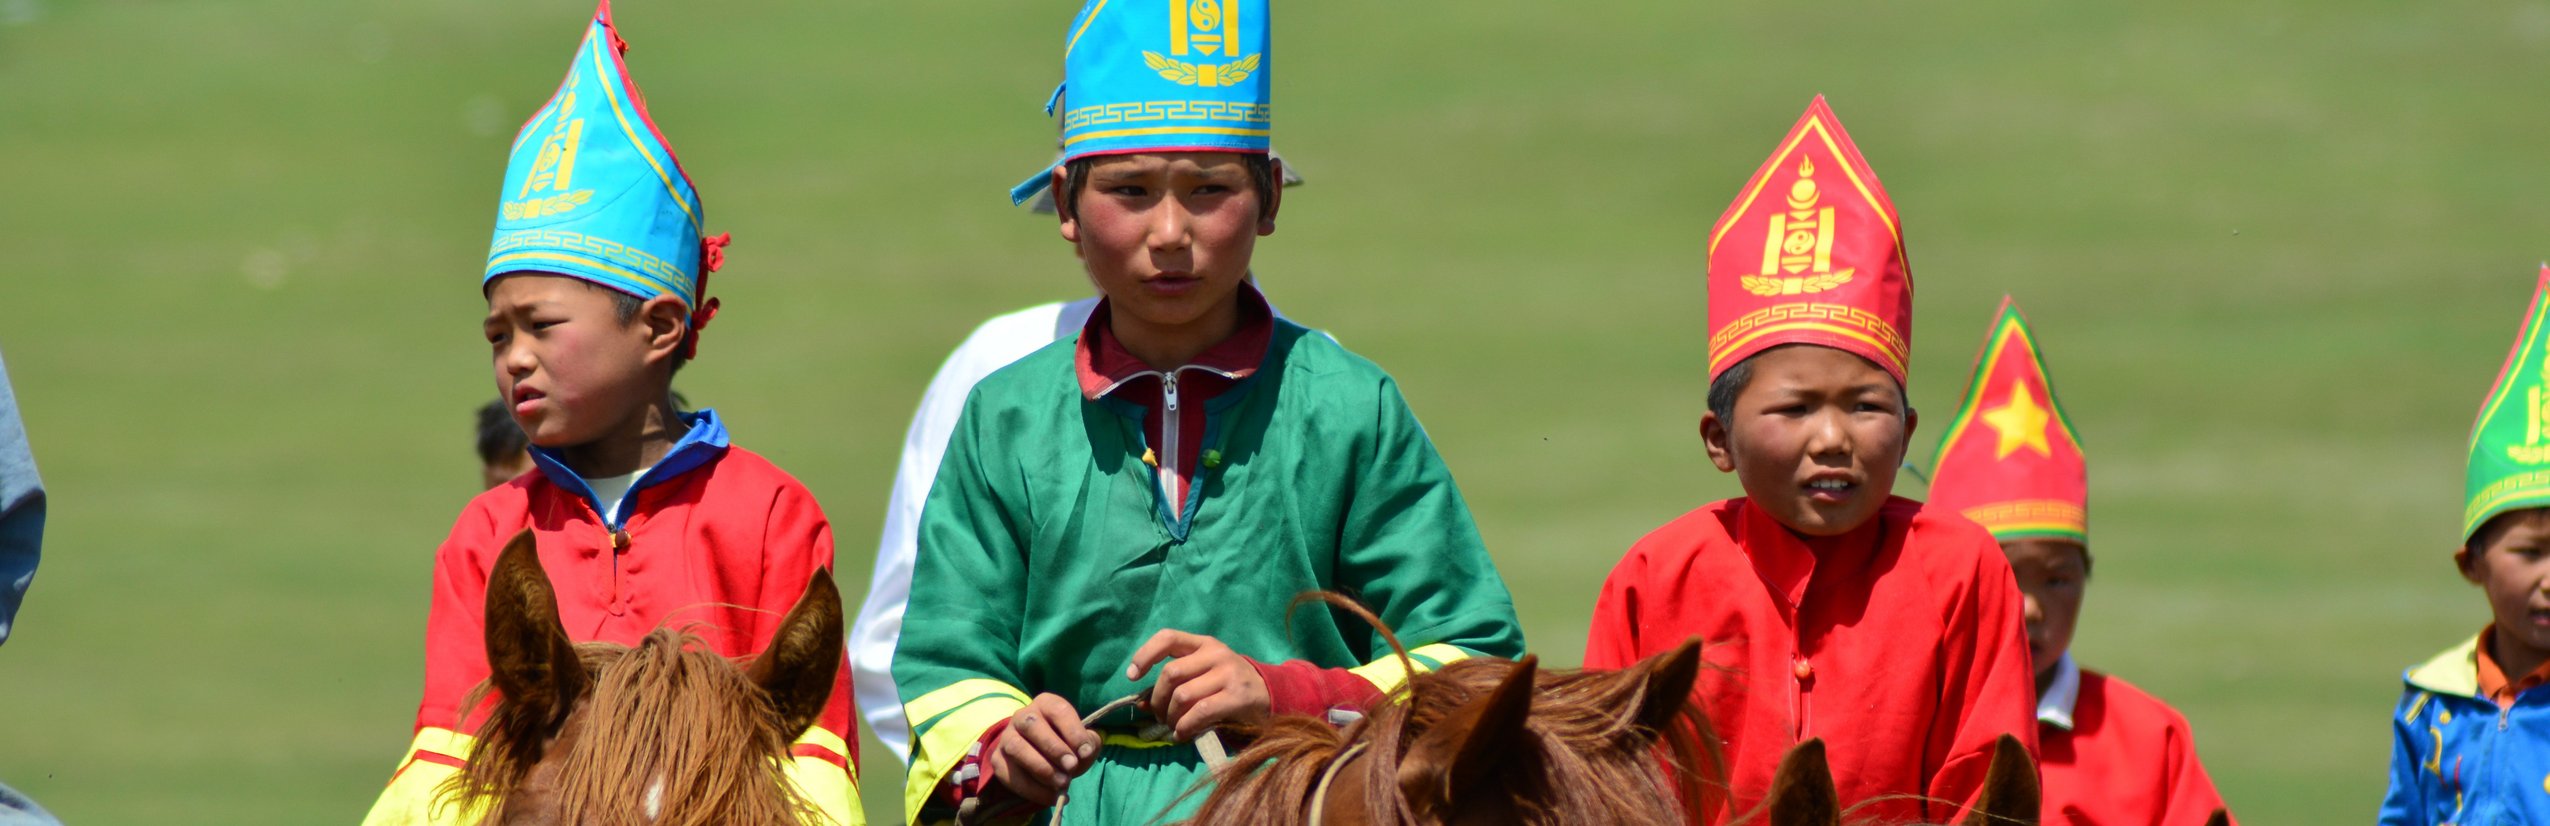 Mongolei Familienreise - Mongolei for family - Mongolische Kinder auf Pferde